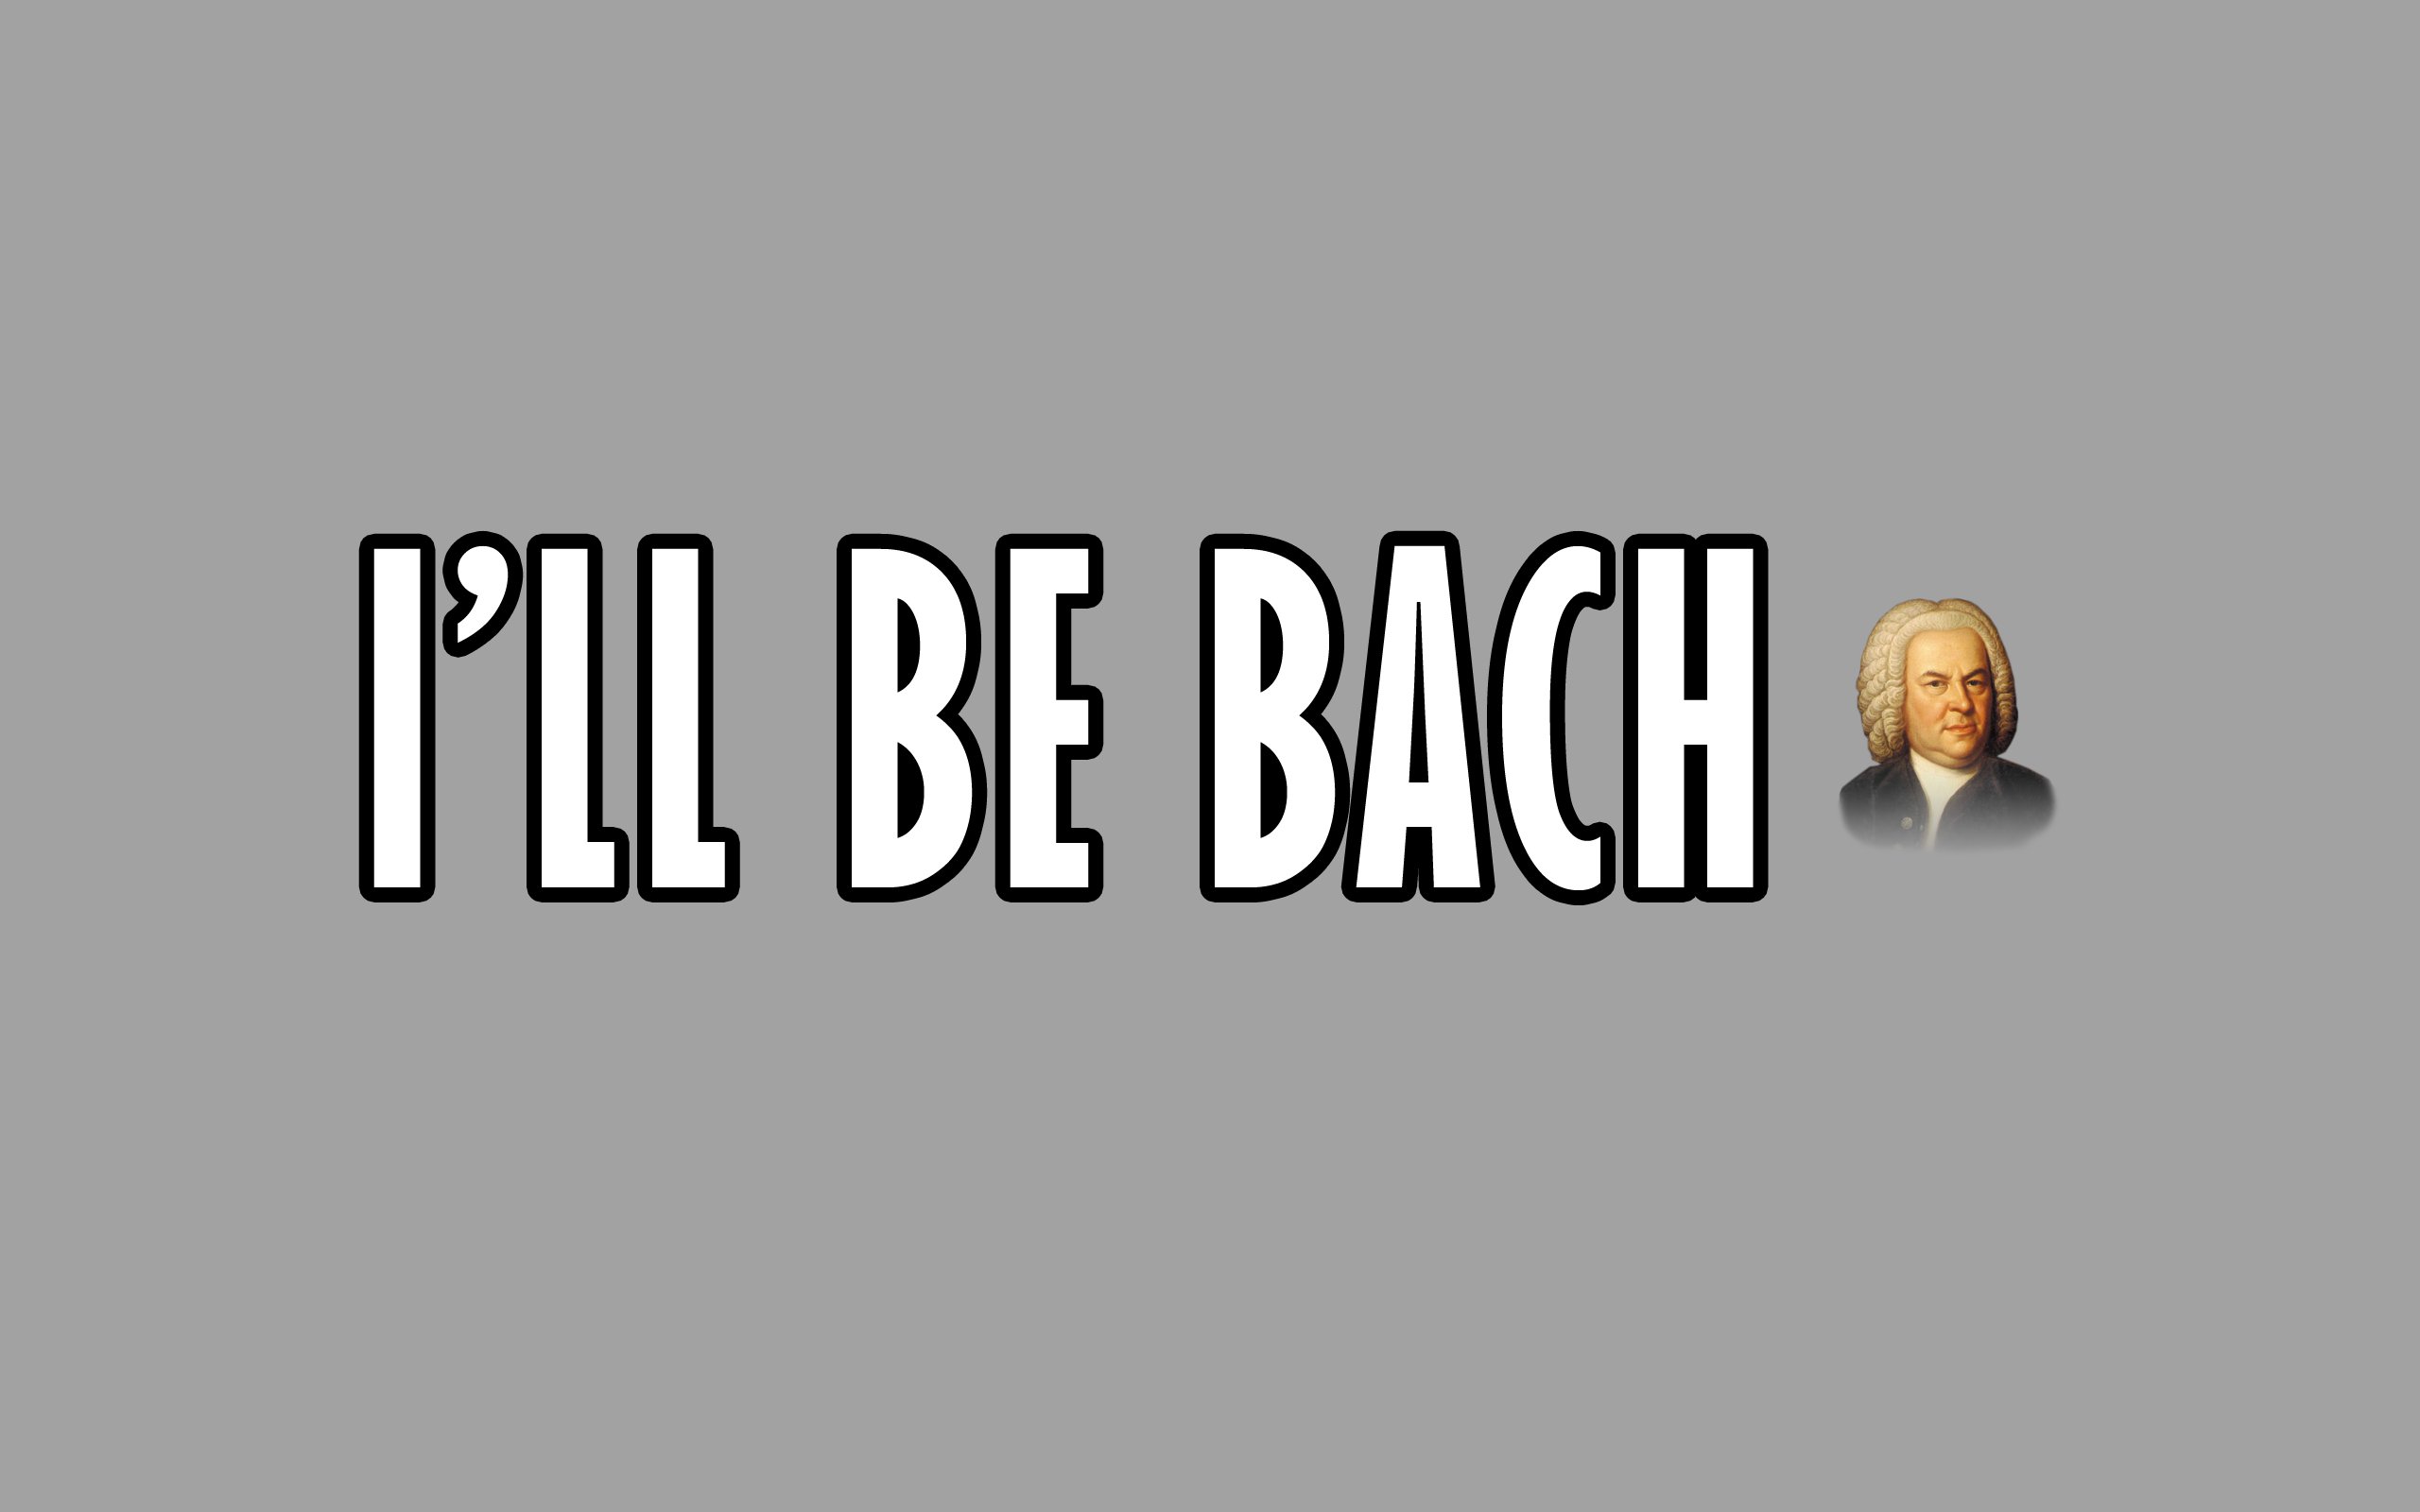 Joke Bach Wallpaper